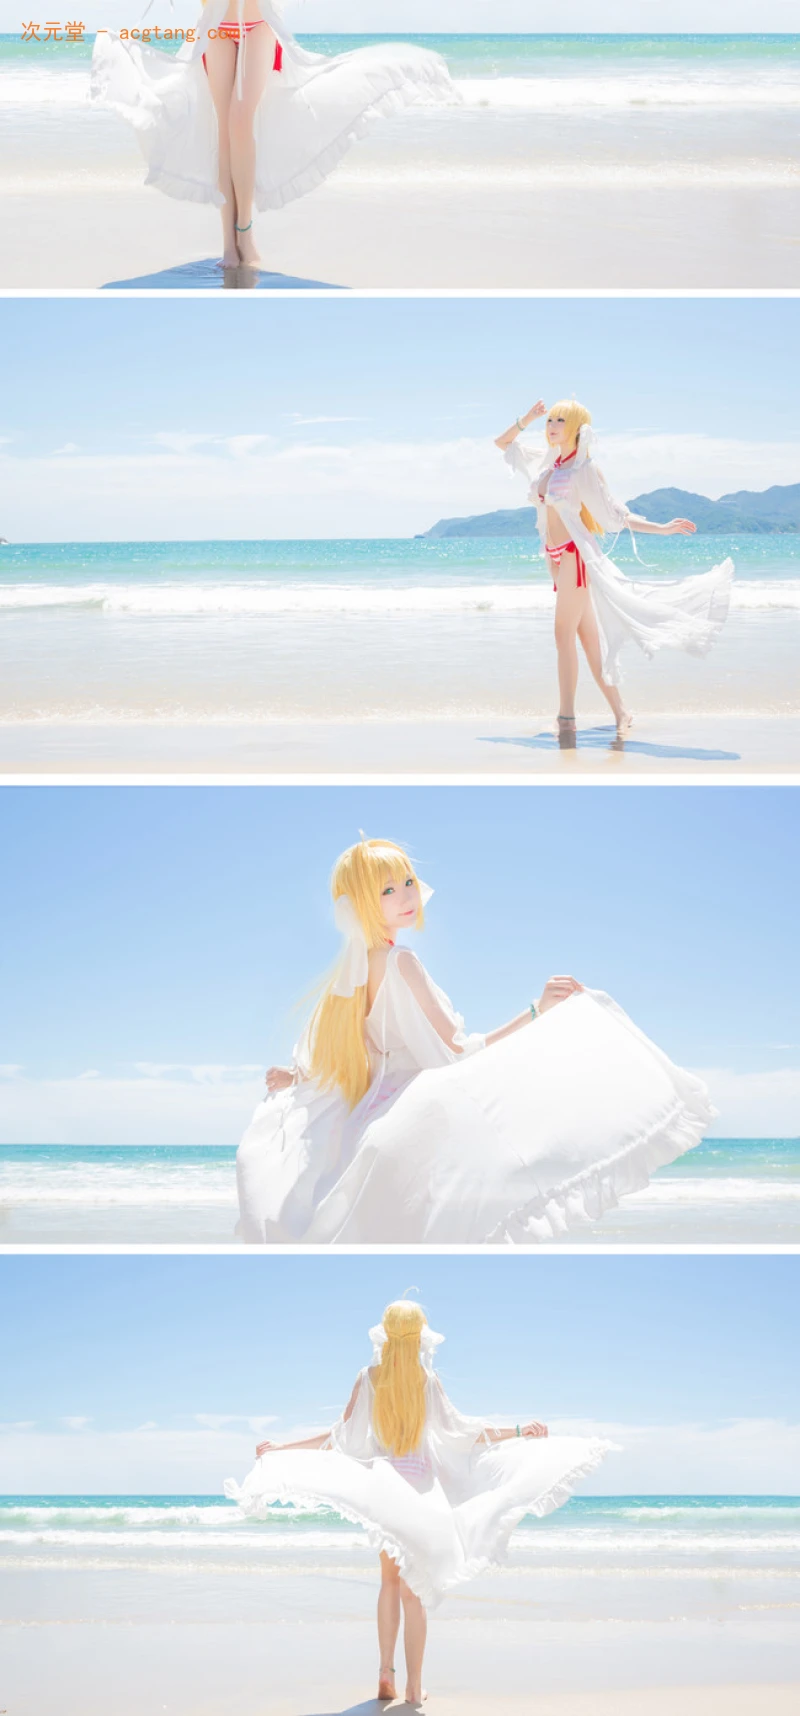 【Fate/Grand Order】cosplay图片 尼禄·克劳狄乌斯 夏日海滩泳装